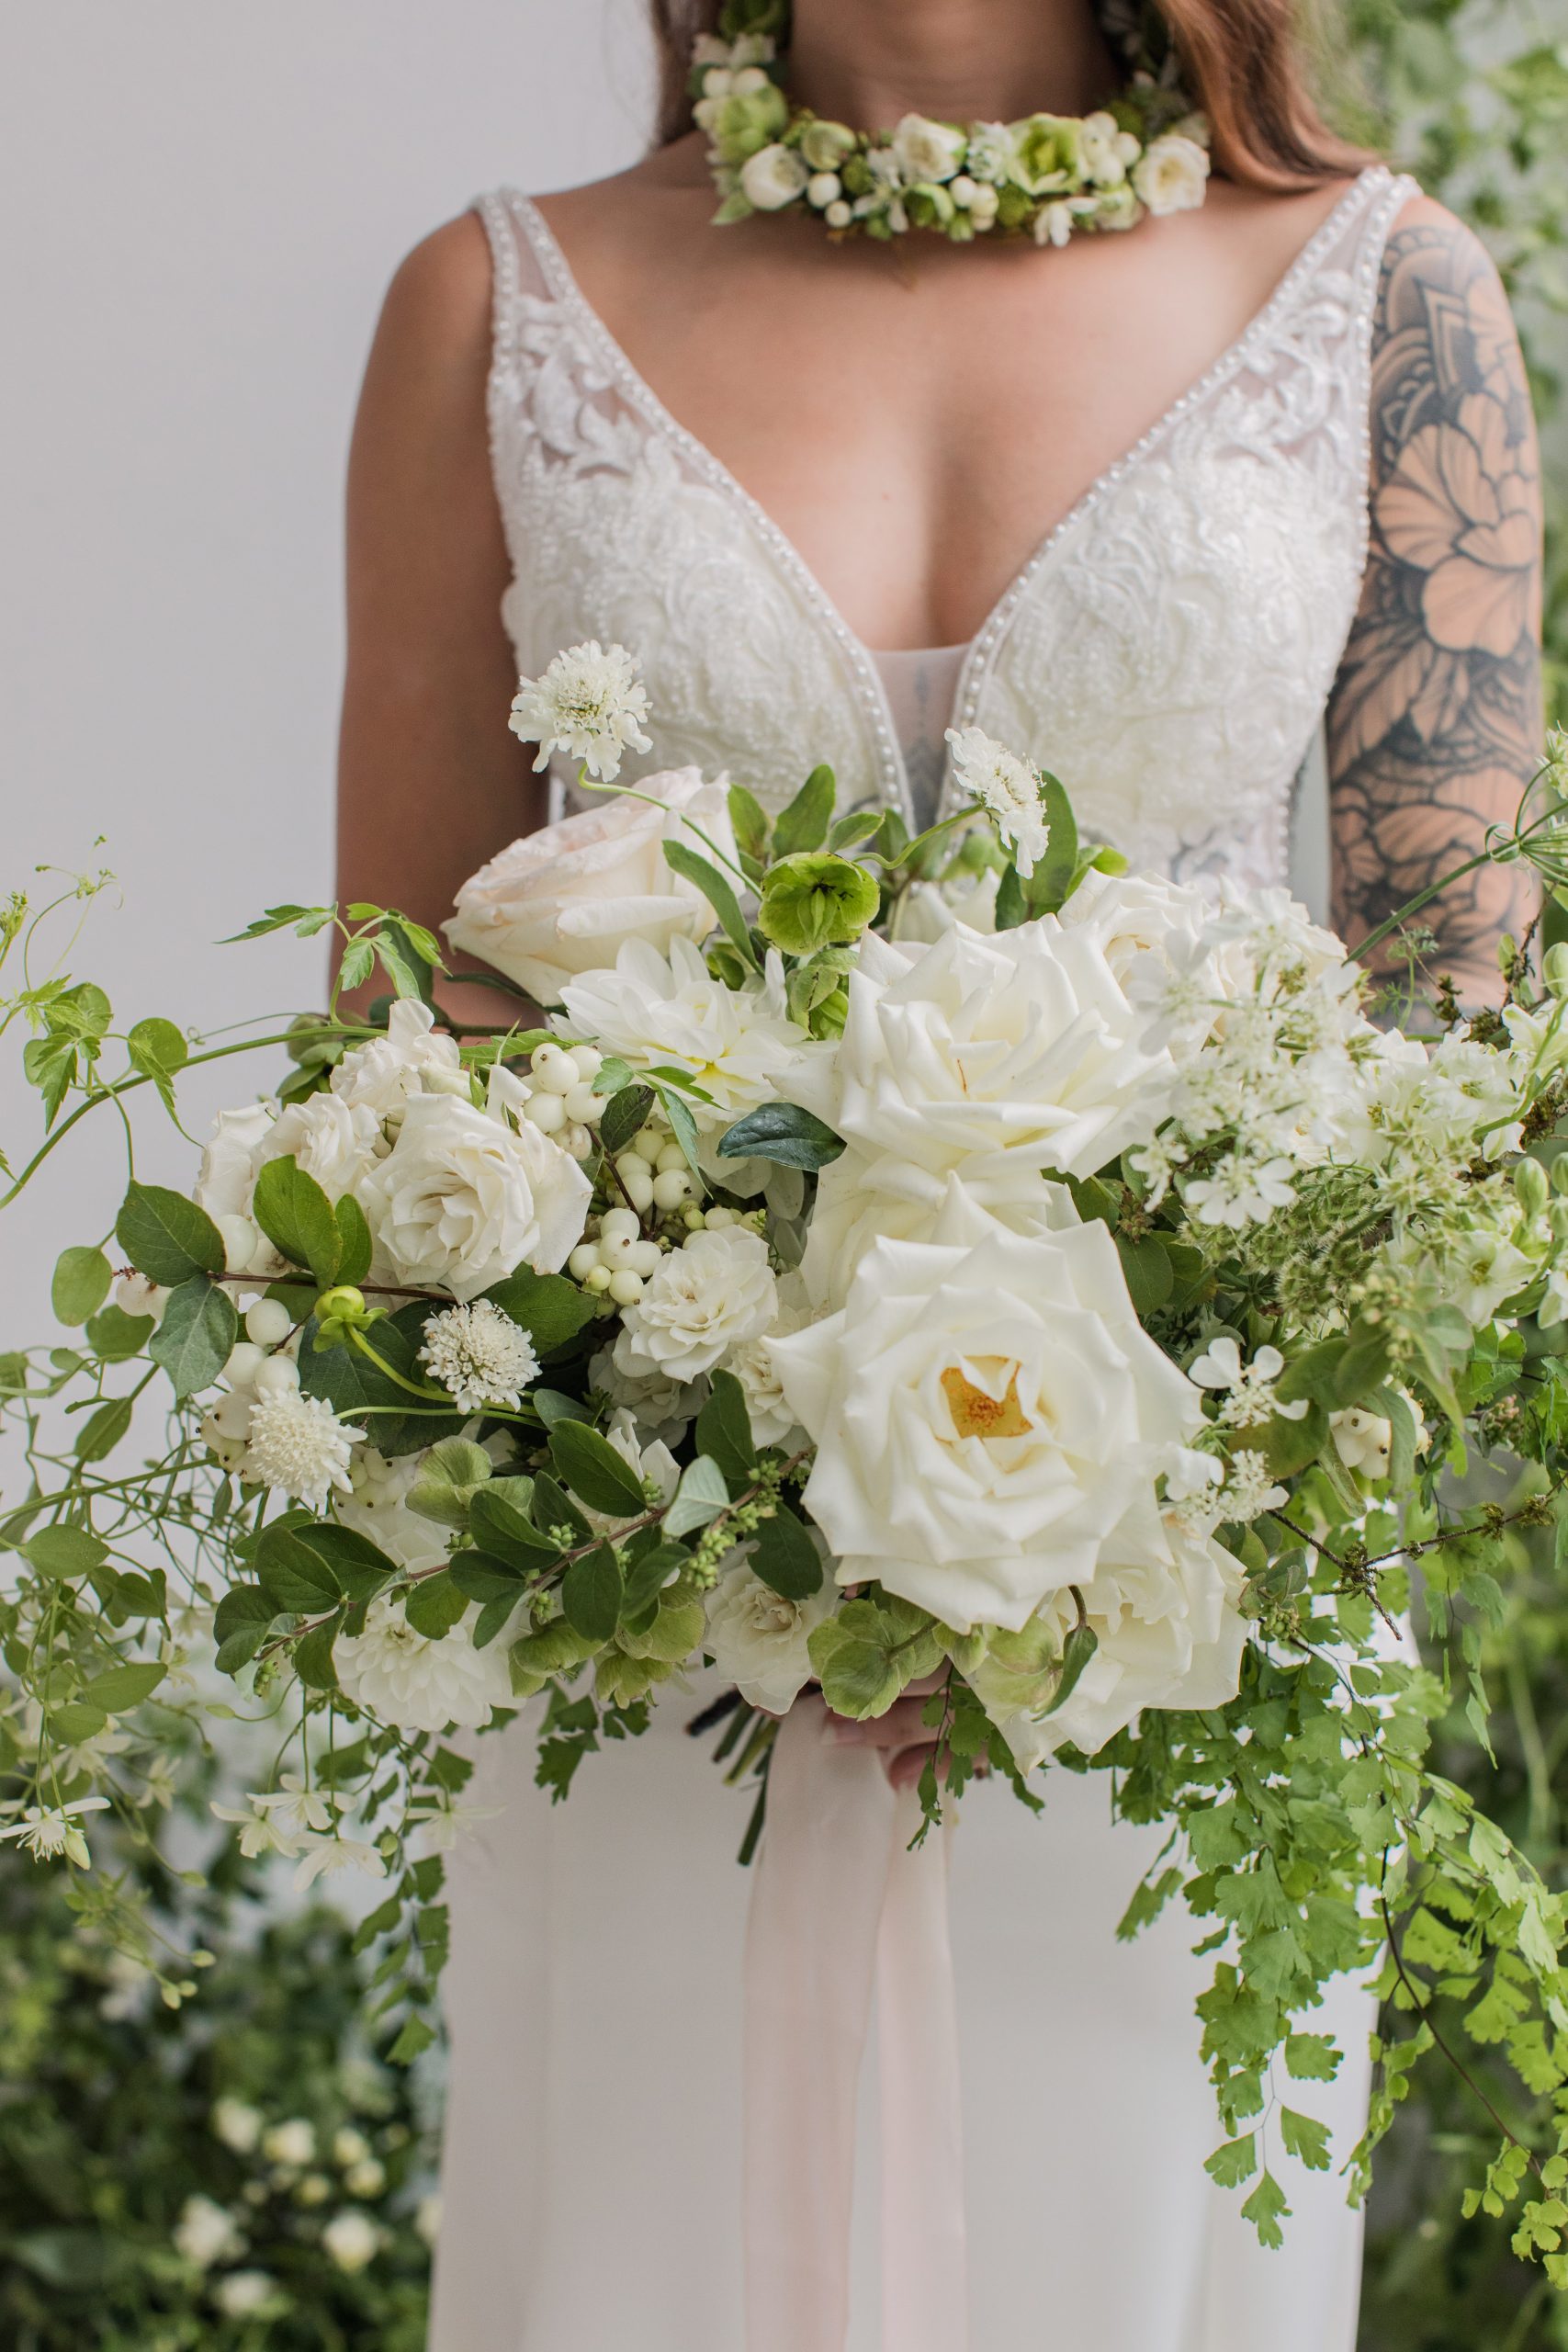 A white wedding bouquet